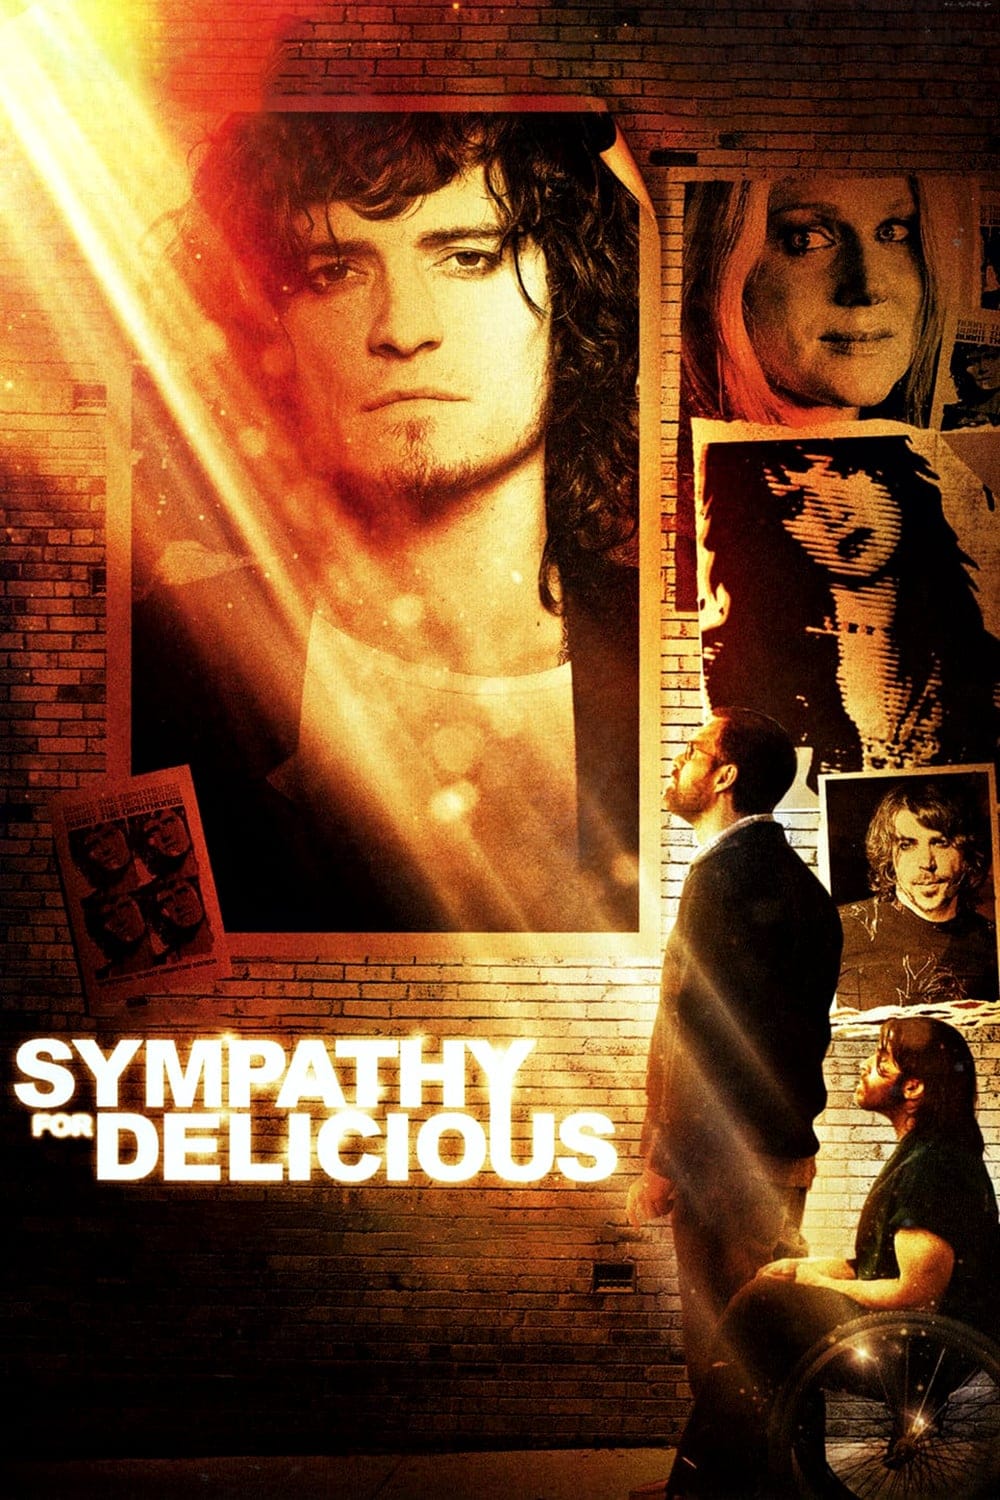 Plakat von "Sympathy for Delicious"